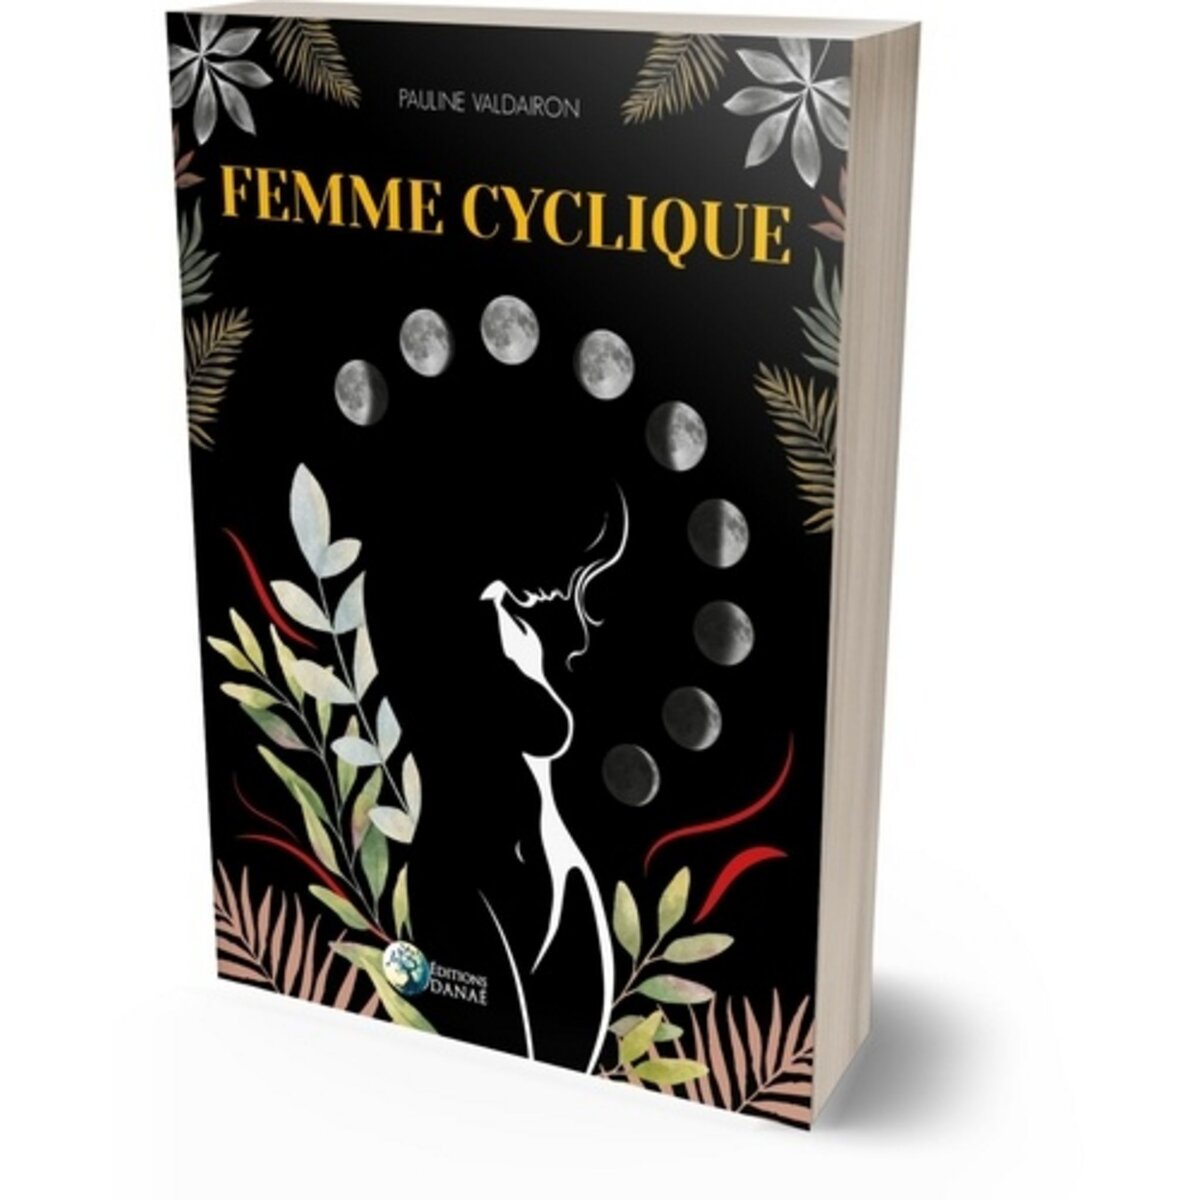  FEMME CYCLIQUE, Valdairon Pauline